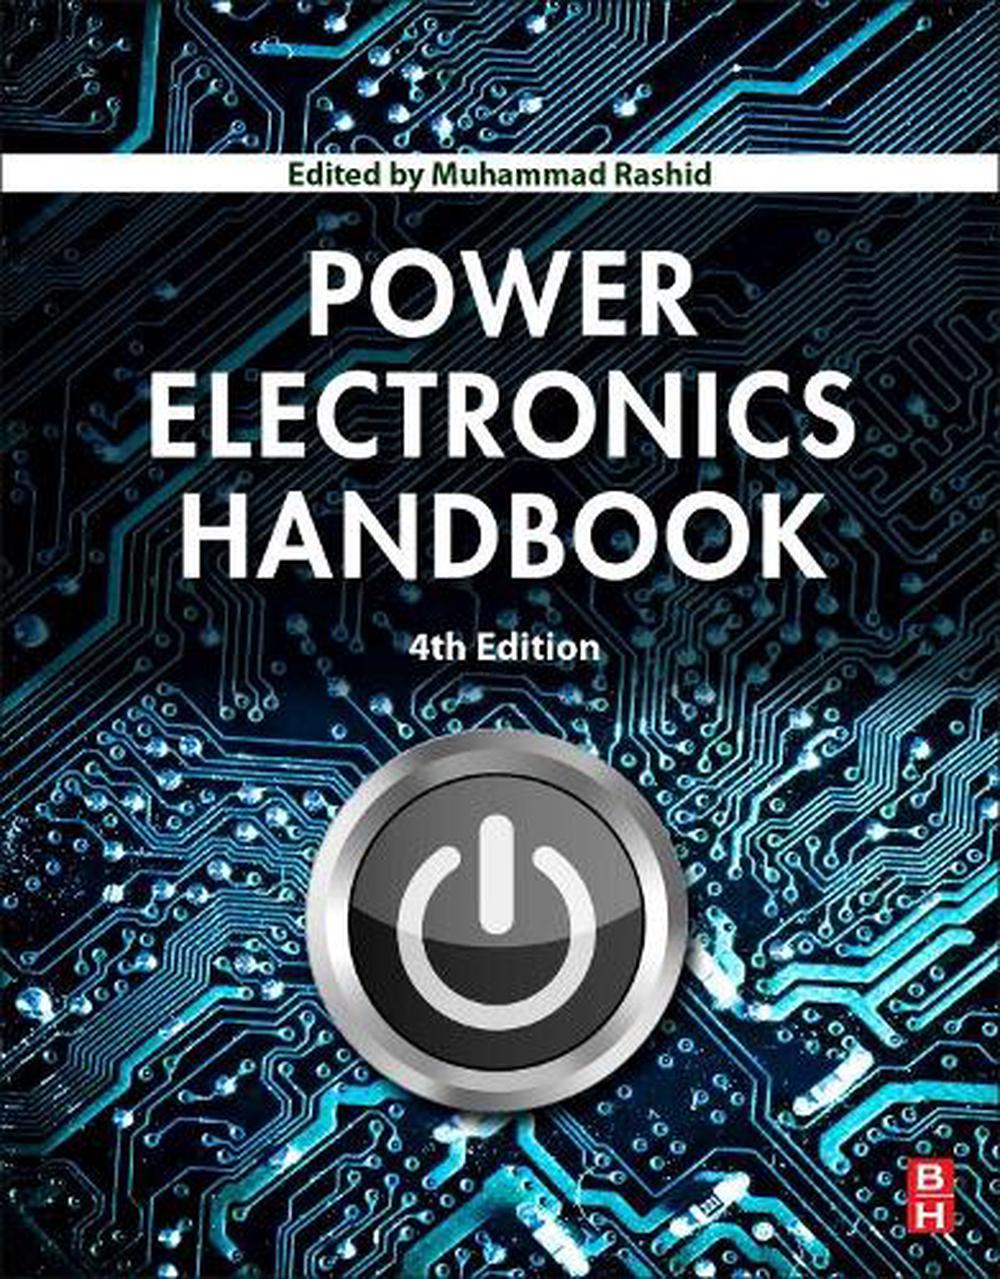 Power Electronics Handbook by Rashid Hardcover Book Free Shipping